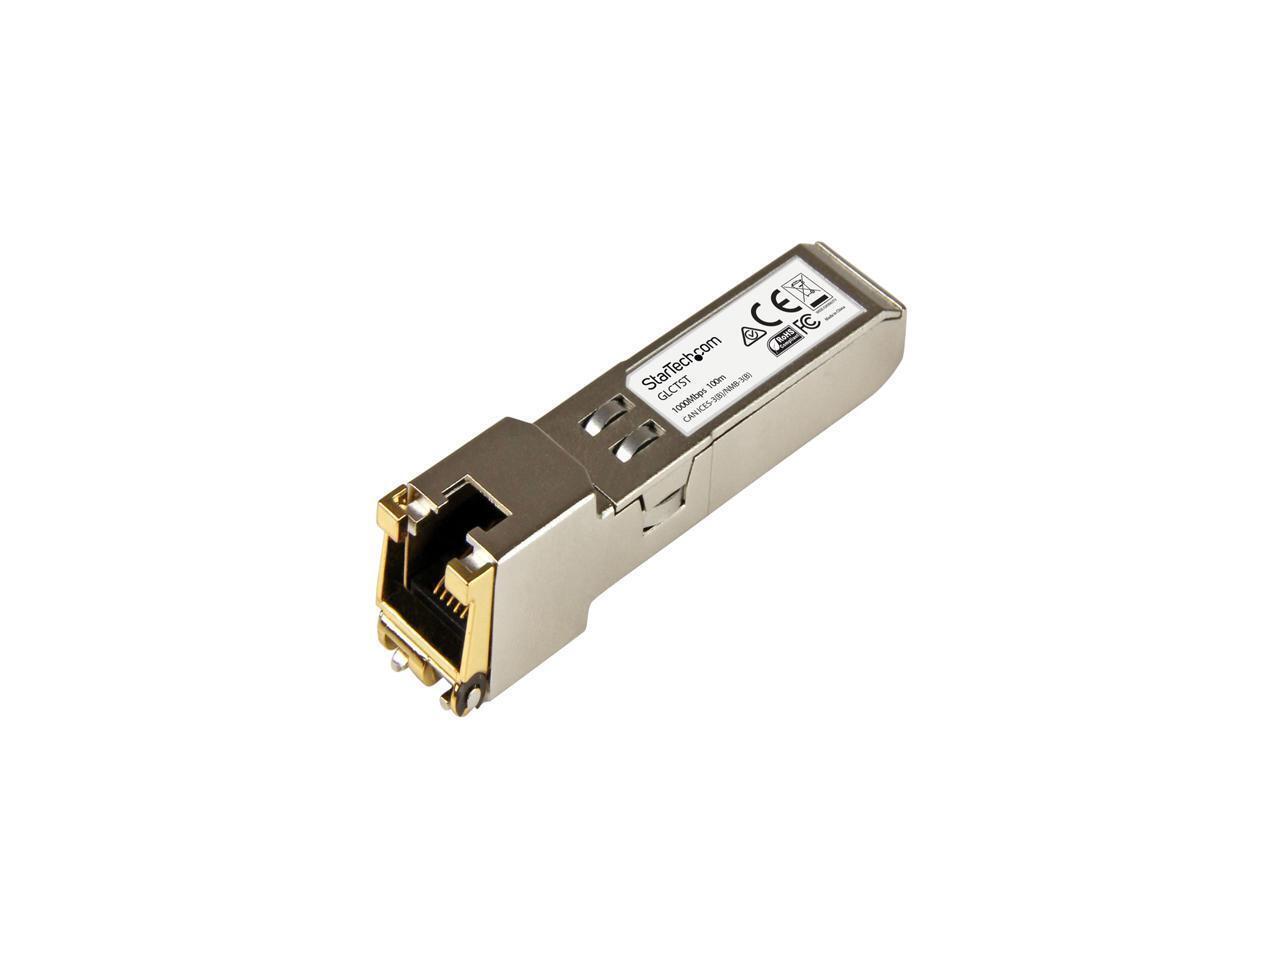 StarTech.com GLCTST Gigabit RJ45 Copper SFP Transceiver Module - Cisco GLC-T